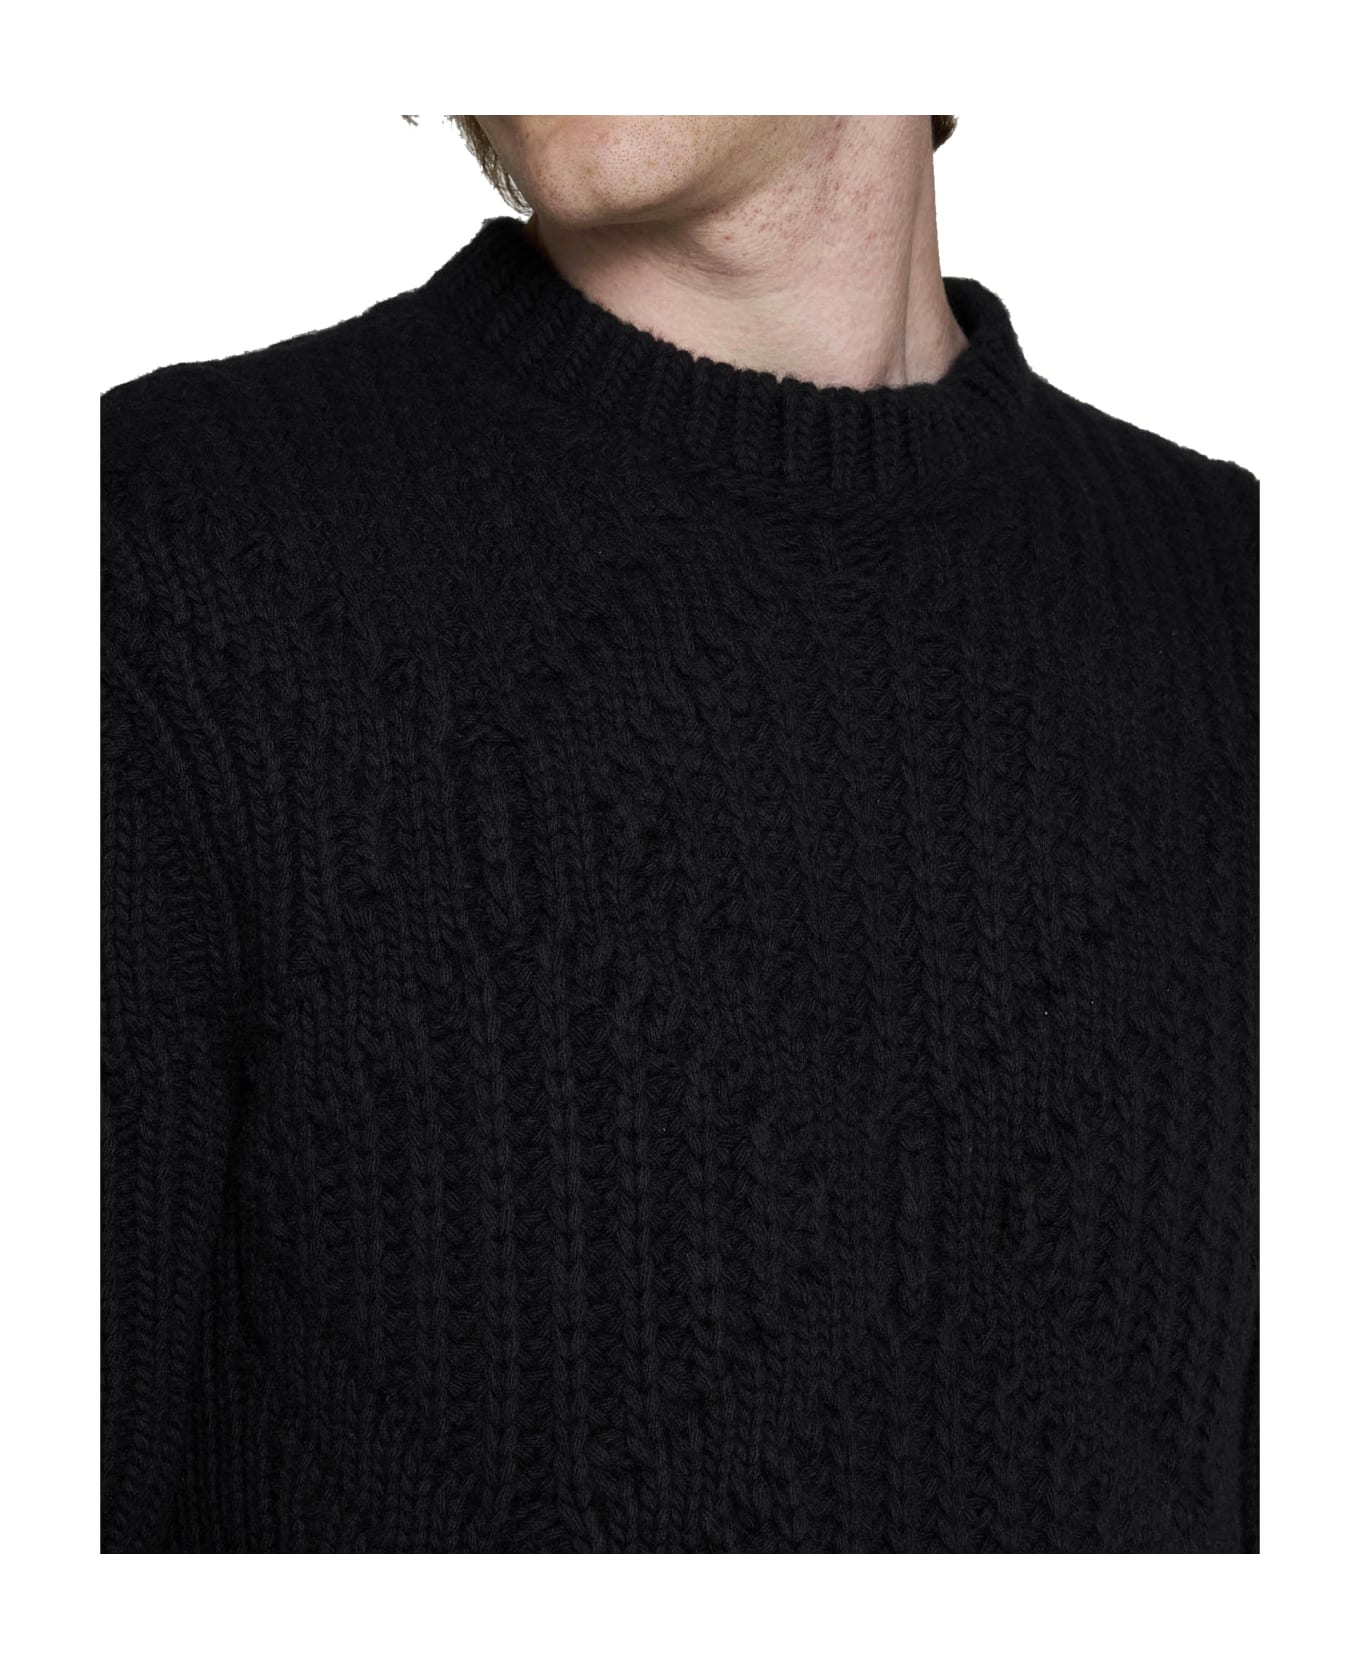 Valentino Wool Sweater - Black ニットウェア